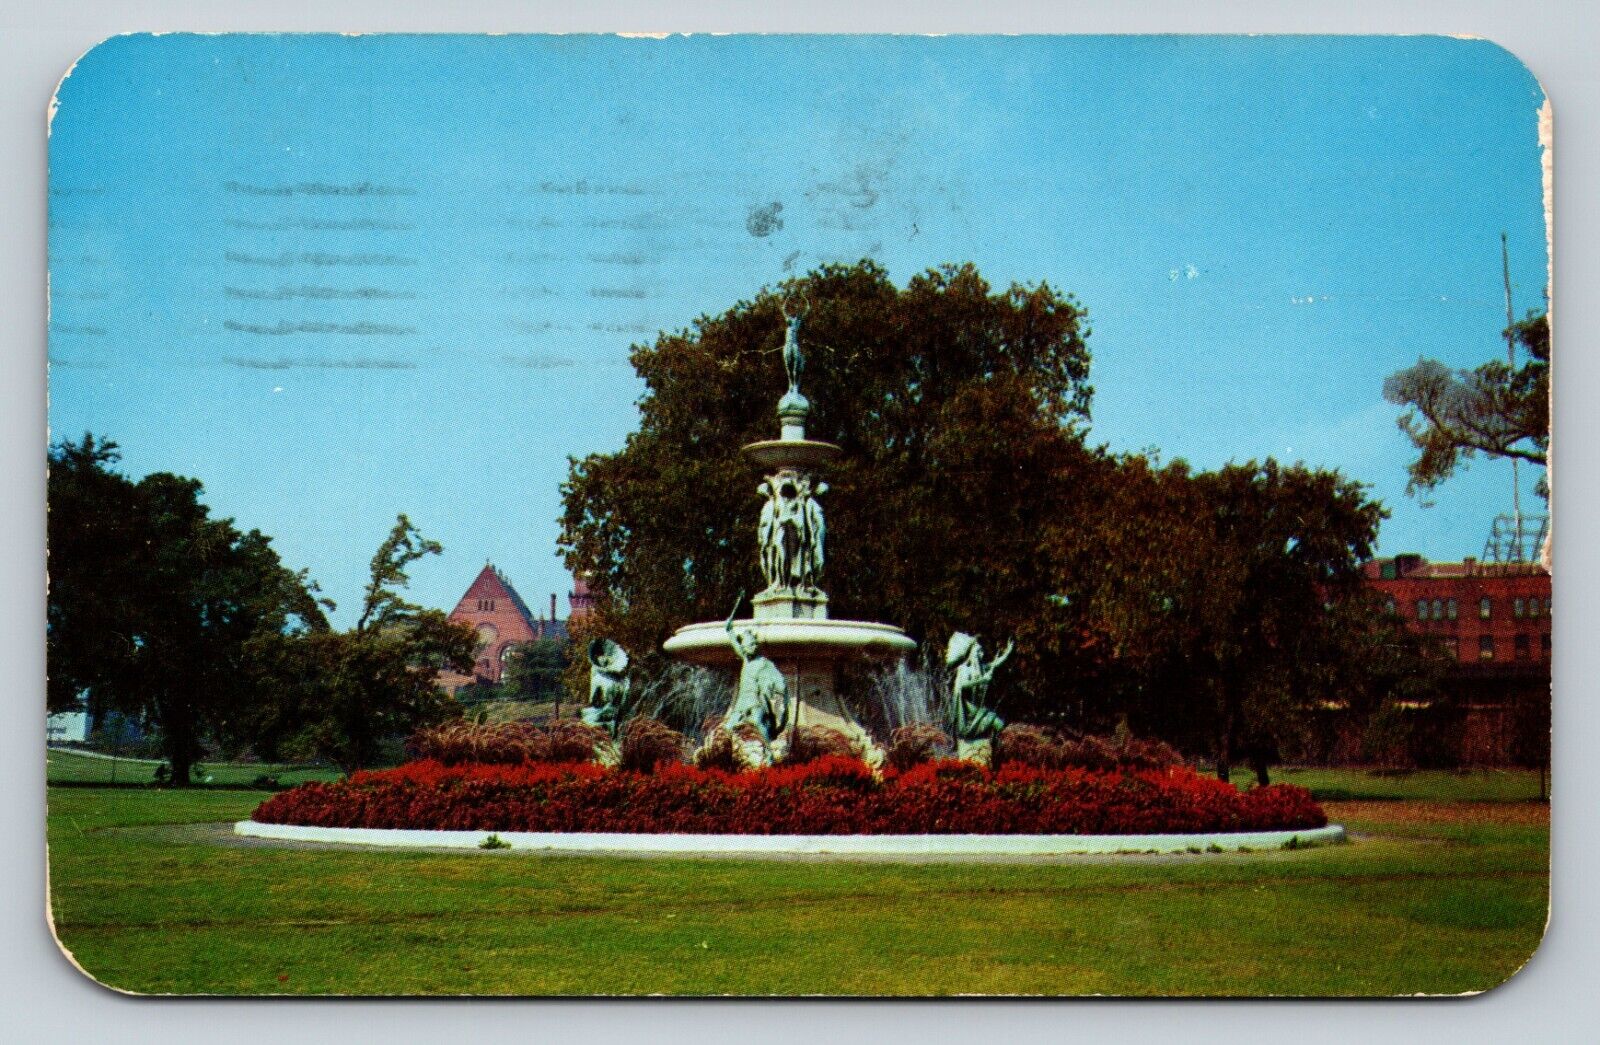 c1958 Corning Fountain at Bushnell Park in HARTFORD CT Vintage Postcard 0802